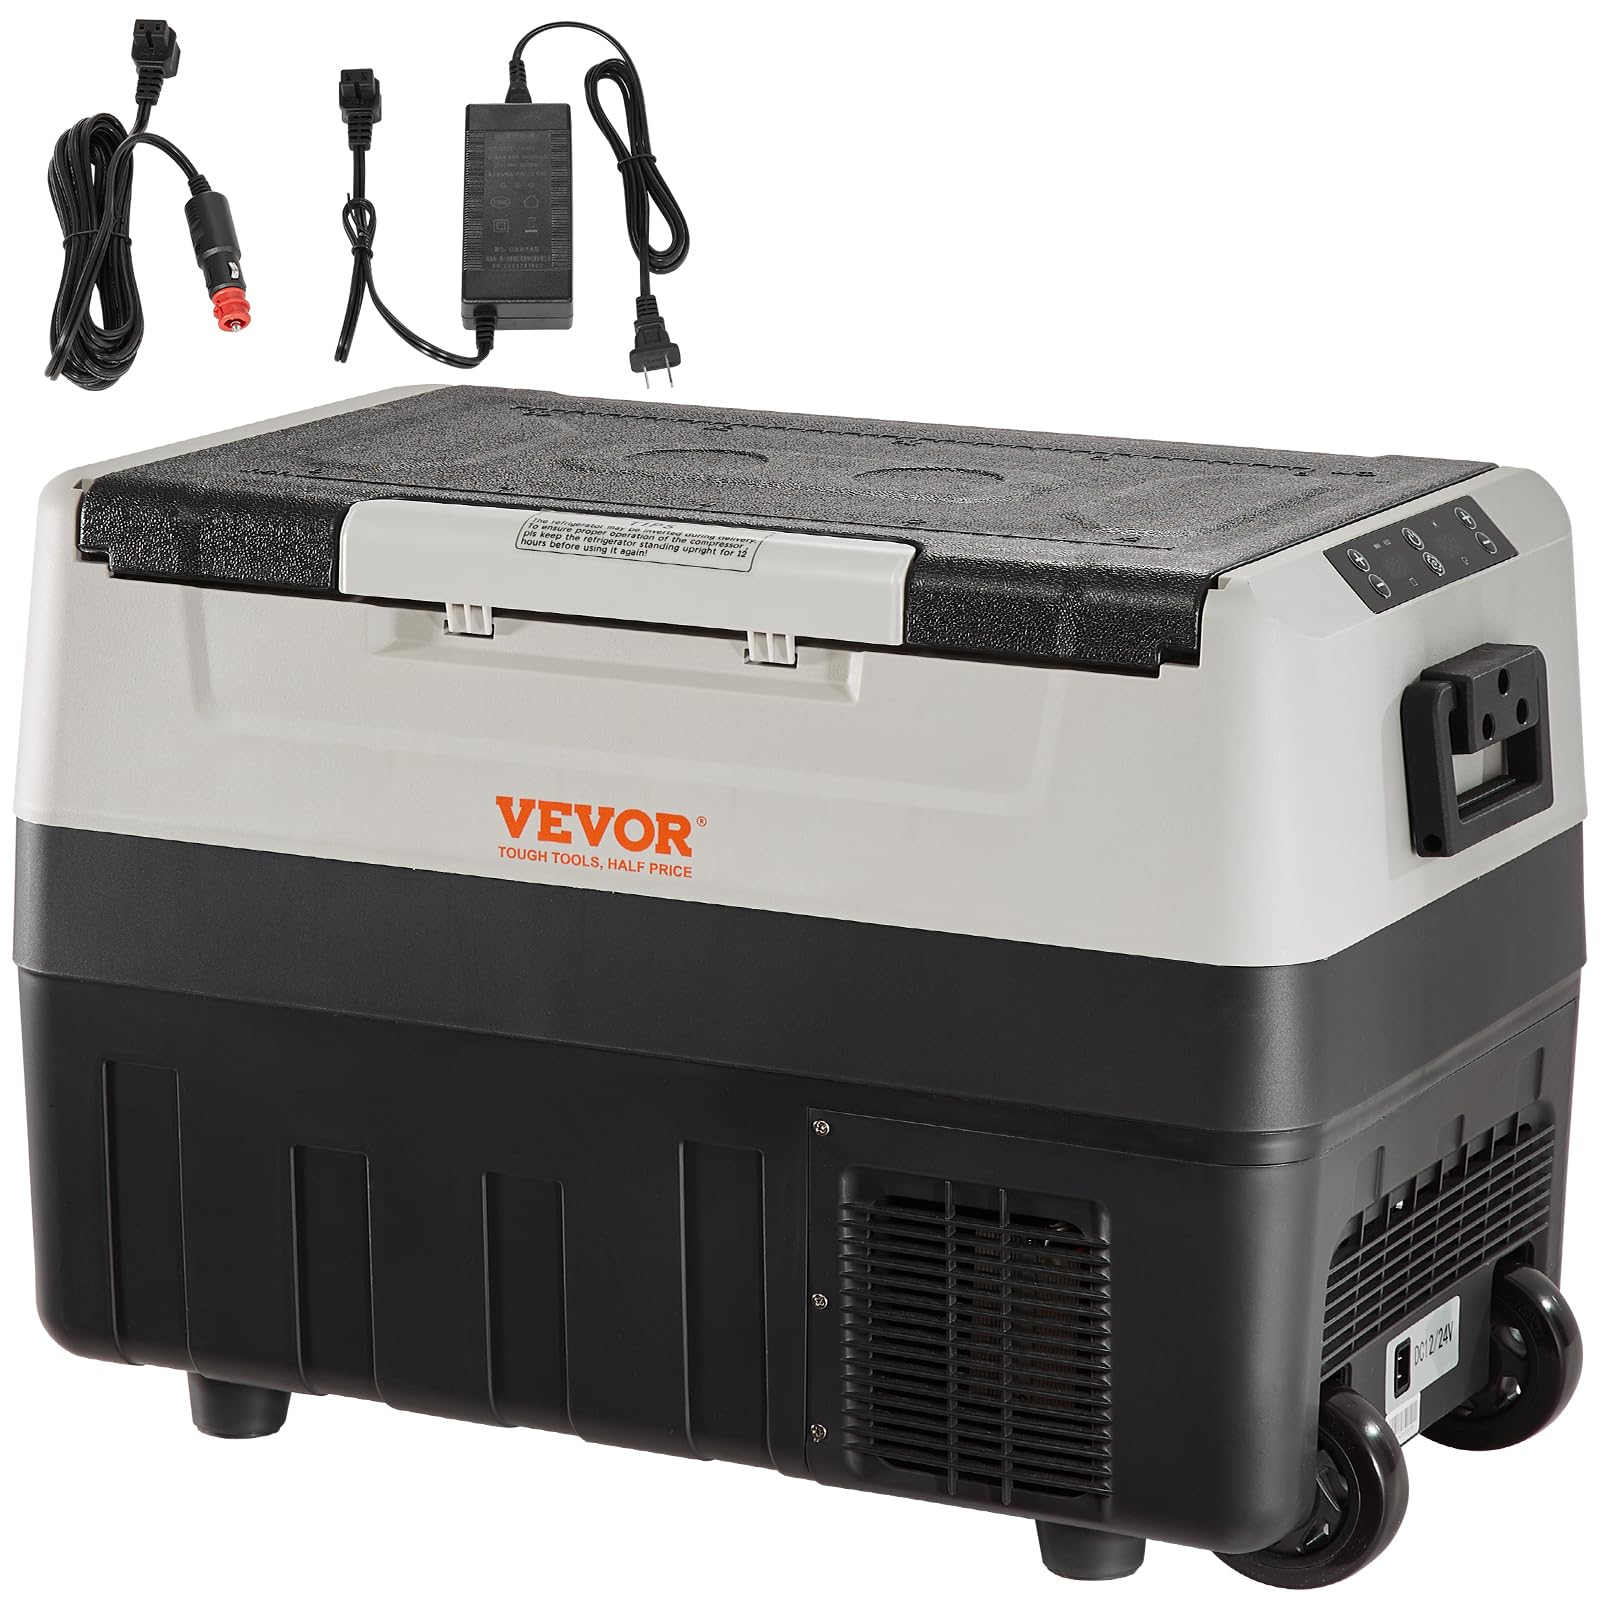 VEVOR Car Refrigerator, 12 Volt Car Refrigerator Fridge, 48 QT/45 L Dual Zone Portable Freezer, -4?-50? Adjustable Range, 12/24V DC and 100-240V AC Compressor Cooler for Outdoor, Camping, Travel, RV